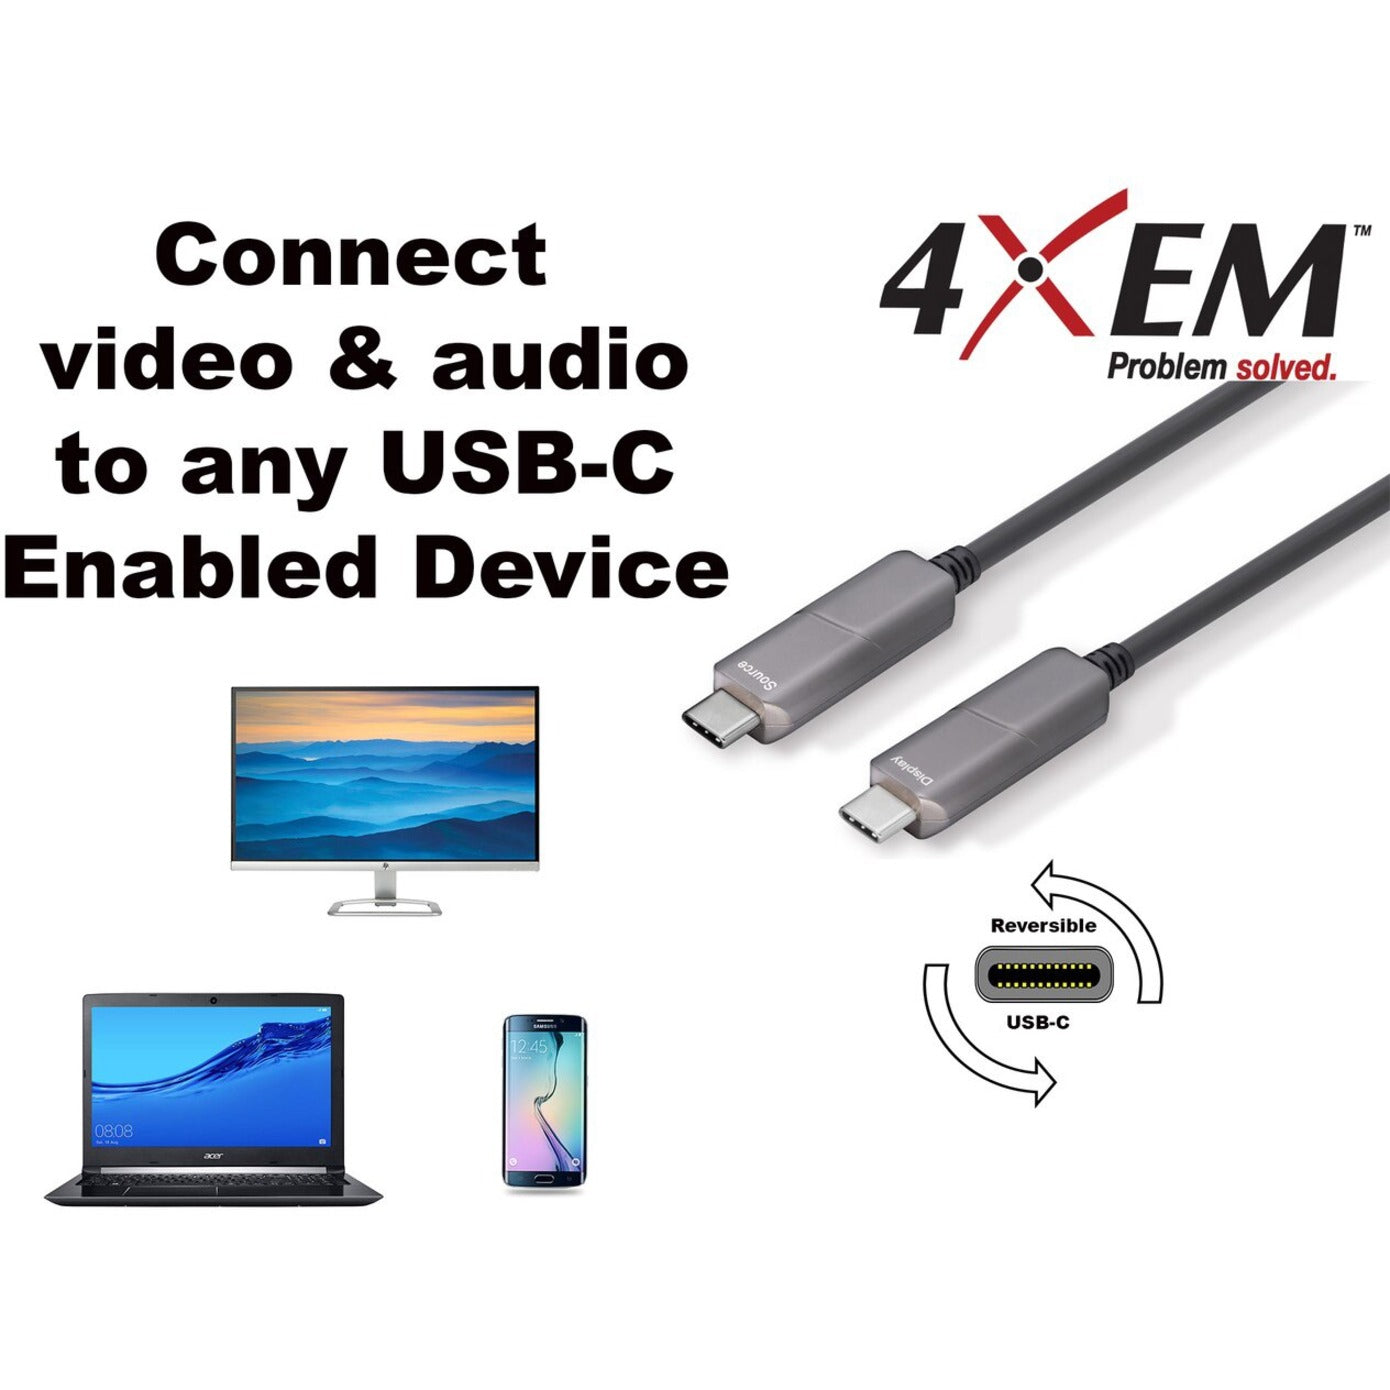 4XEM 4XUSBCFIBER15M 15M Fiber USB Type-C Cable, 4K@60HZ 21.6 Gbps, Plug & Play